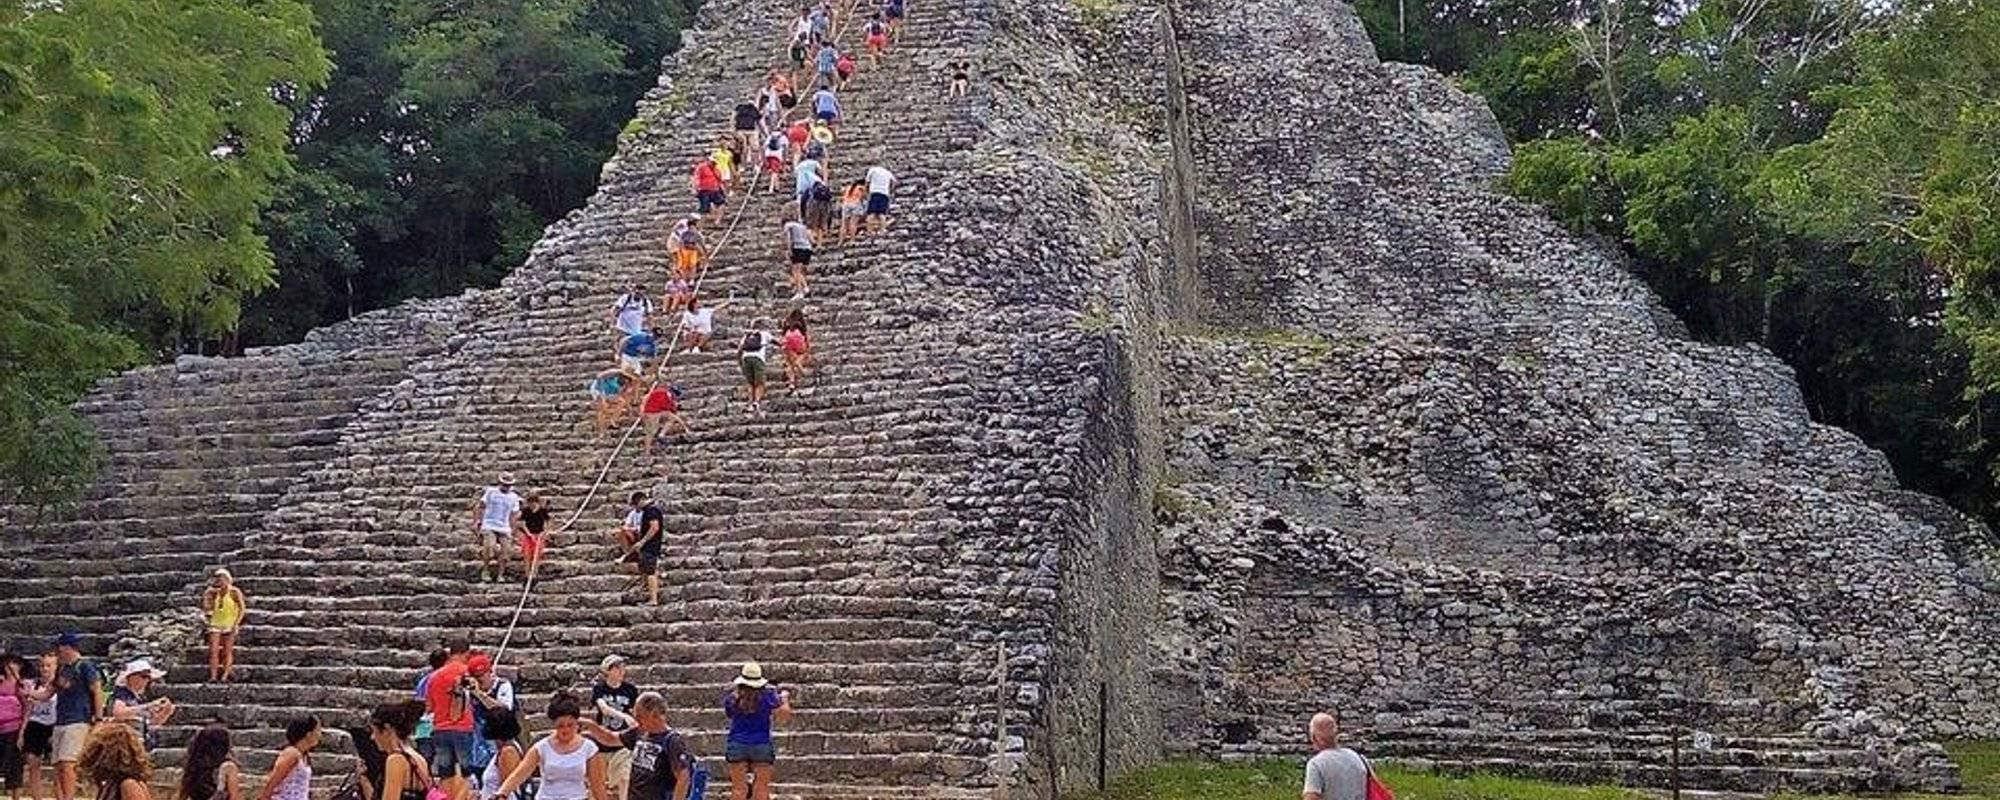 Beauties of Yucatan: the magnificent Mayan ruins of Coba